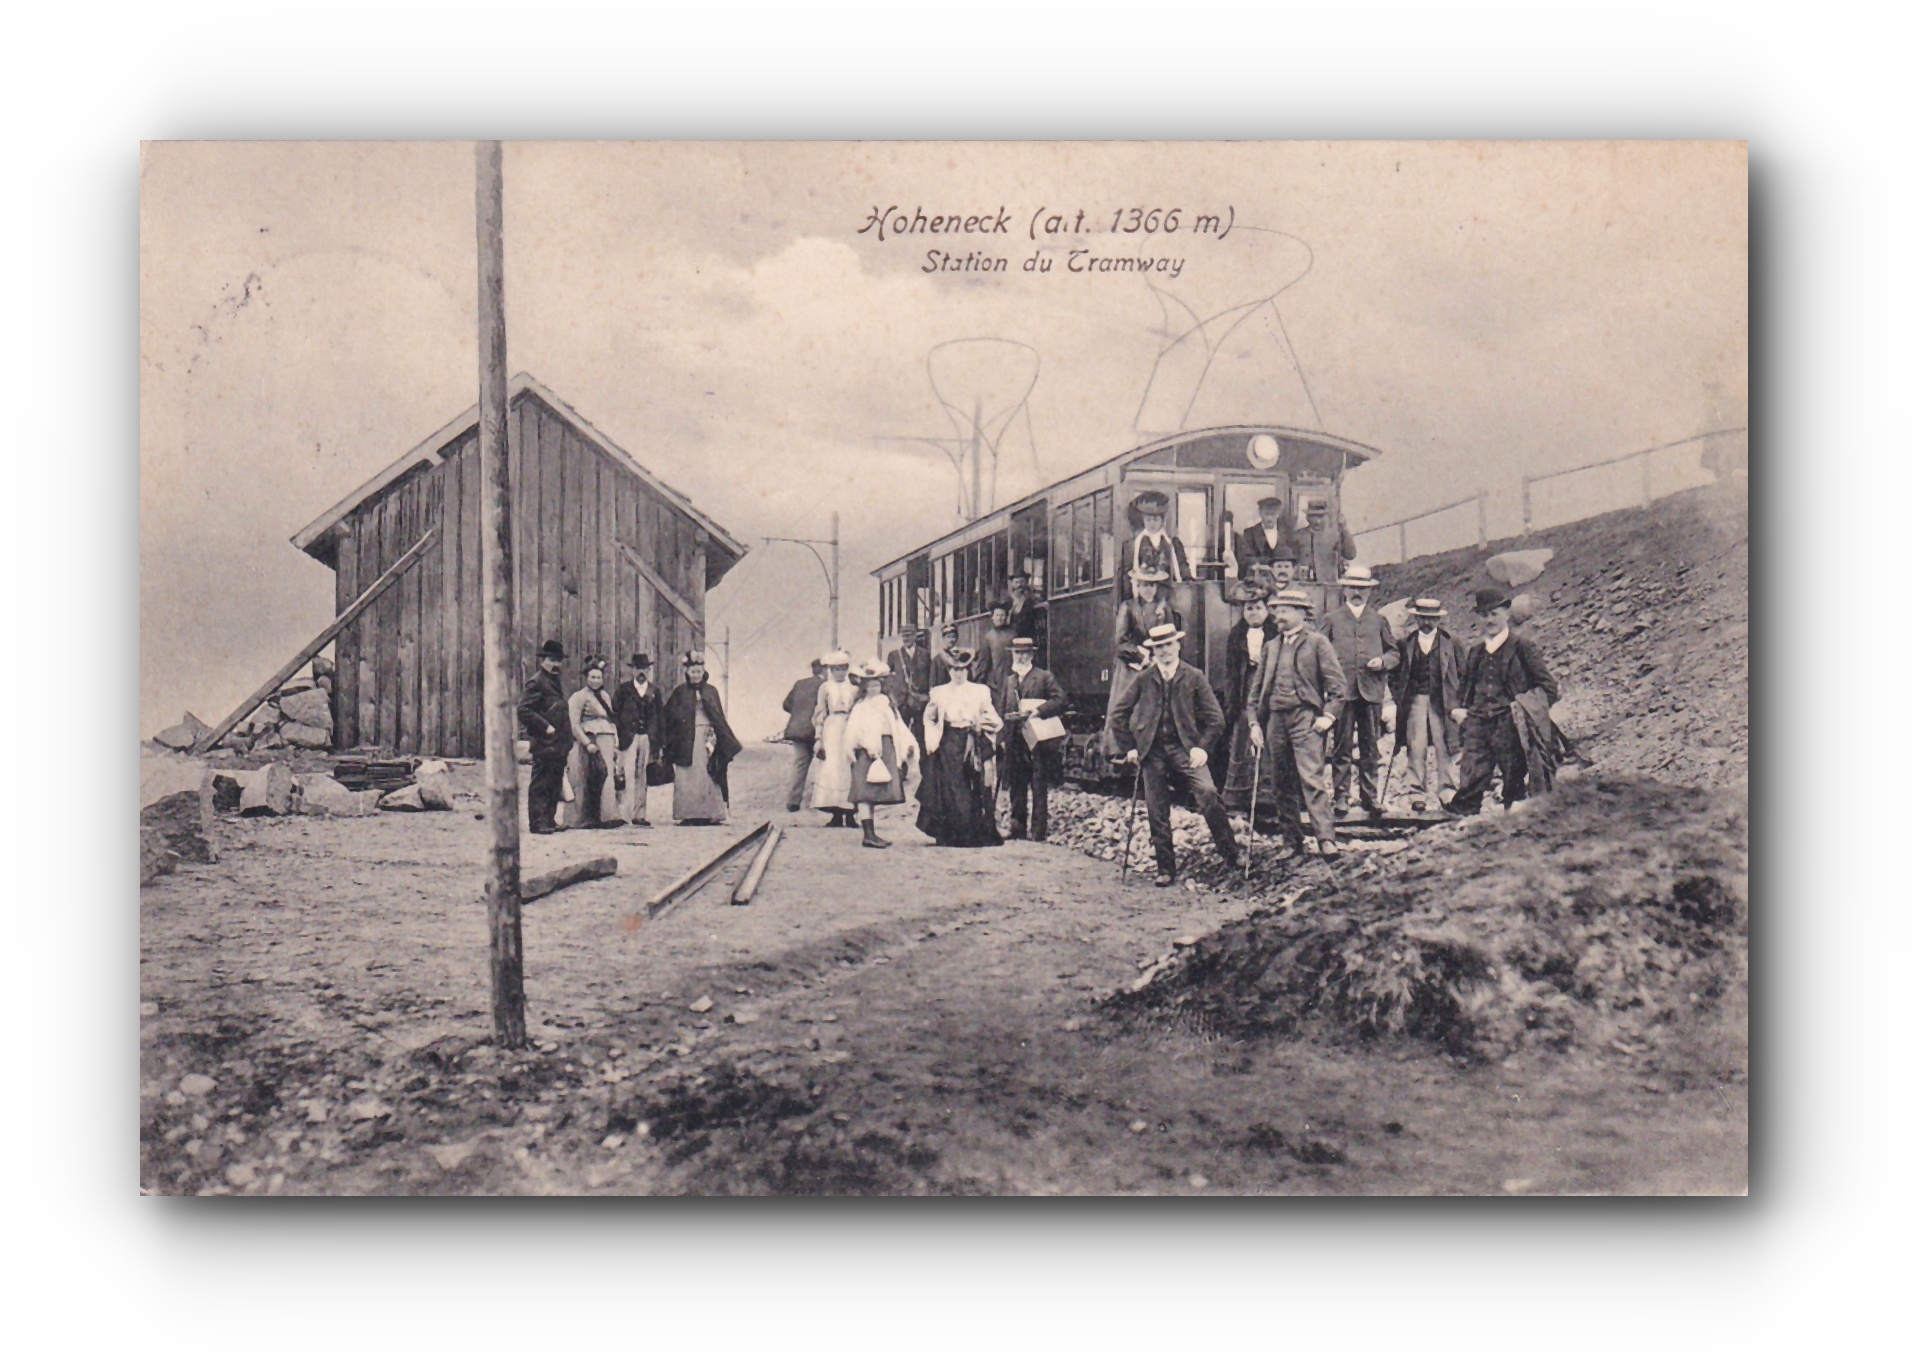 - Hoheneck - Station du Tramway - 25.05.1903 -